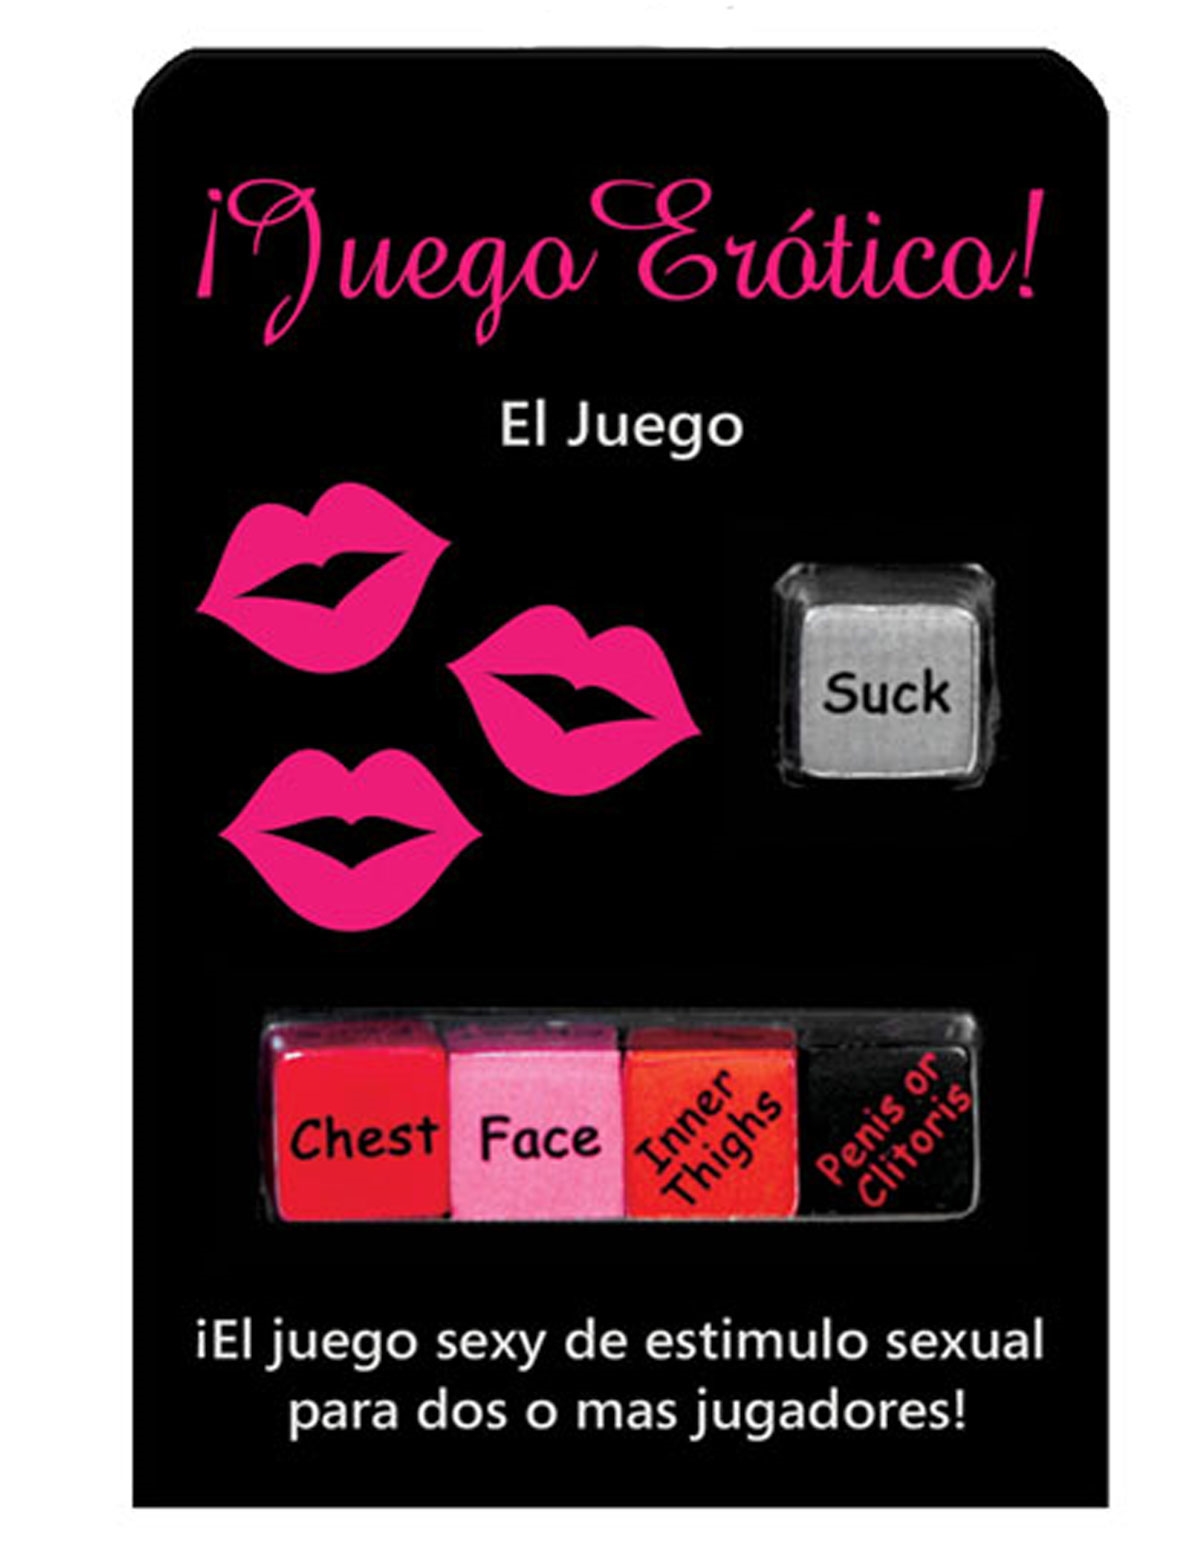 alternate image for Juego Erotico!